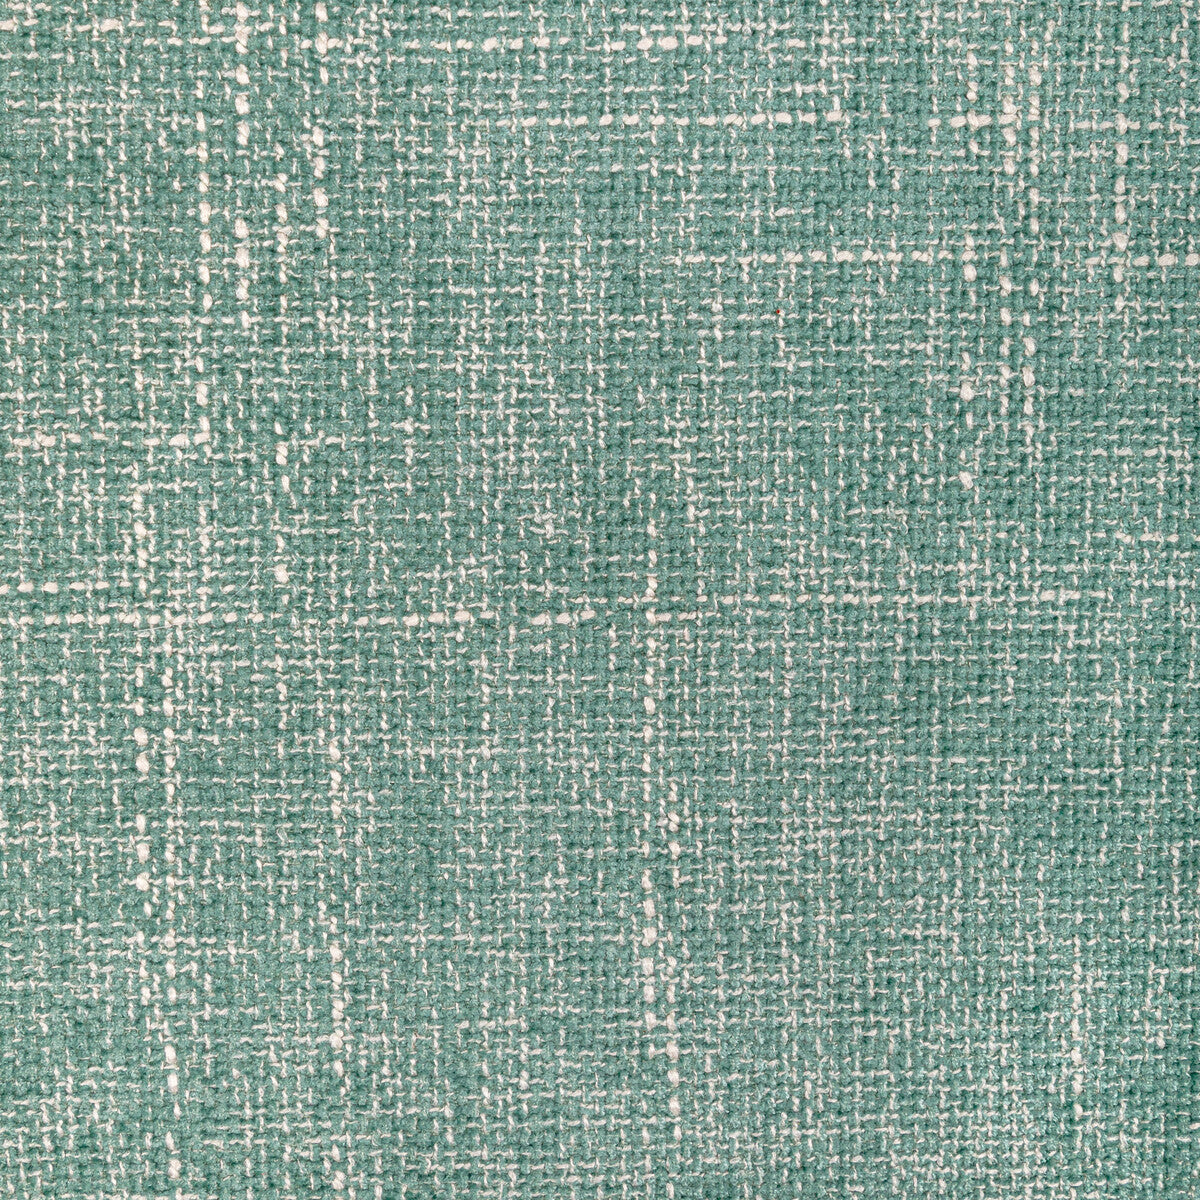 Kravet Smart fabric in 36579-13 color - pattern 36579.13.0 - by Kravet Smart in the Performance Kravetarmor collection